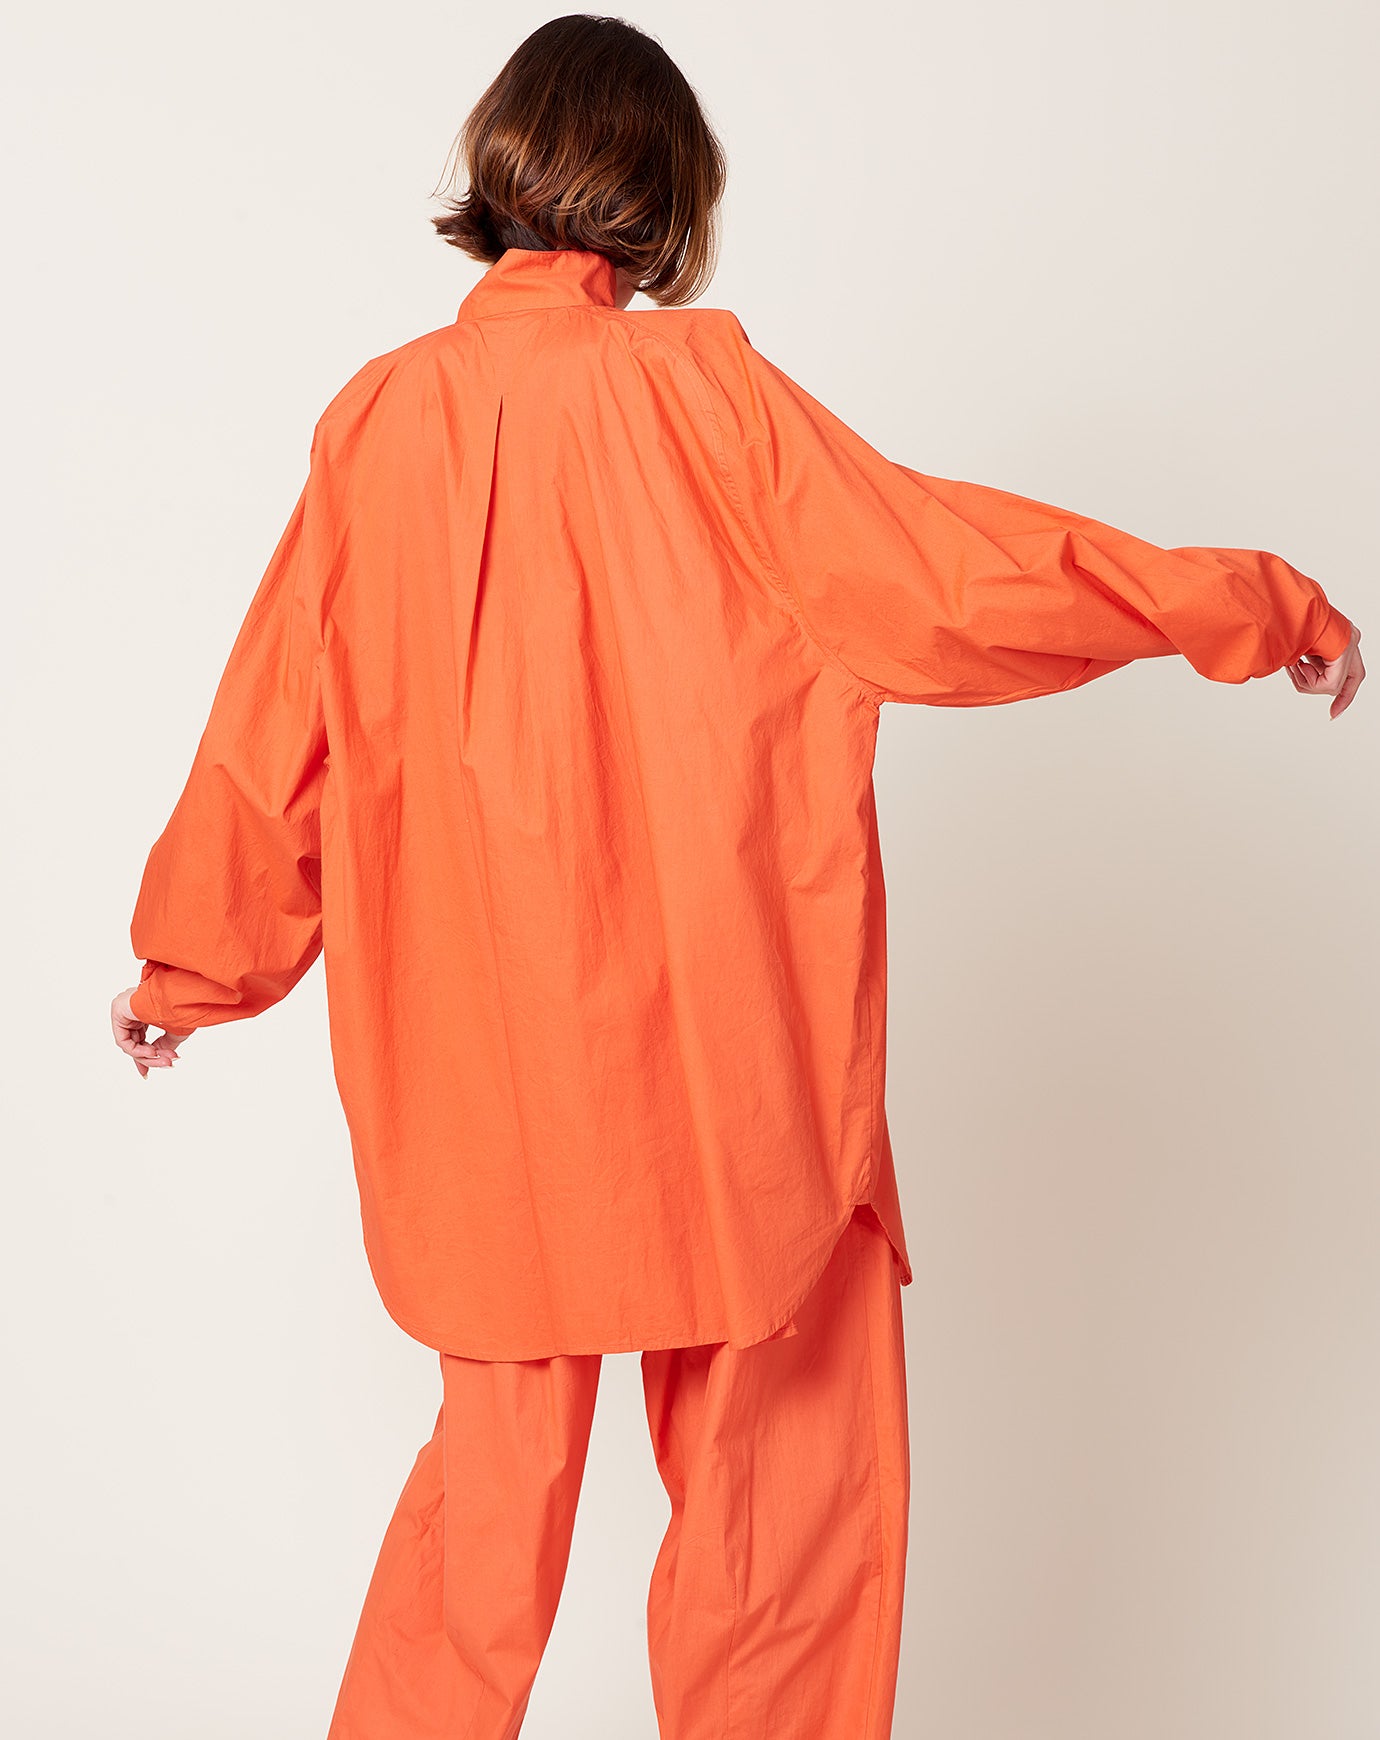 Anaak Joan Oversized Tunic in Rouge Orange